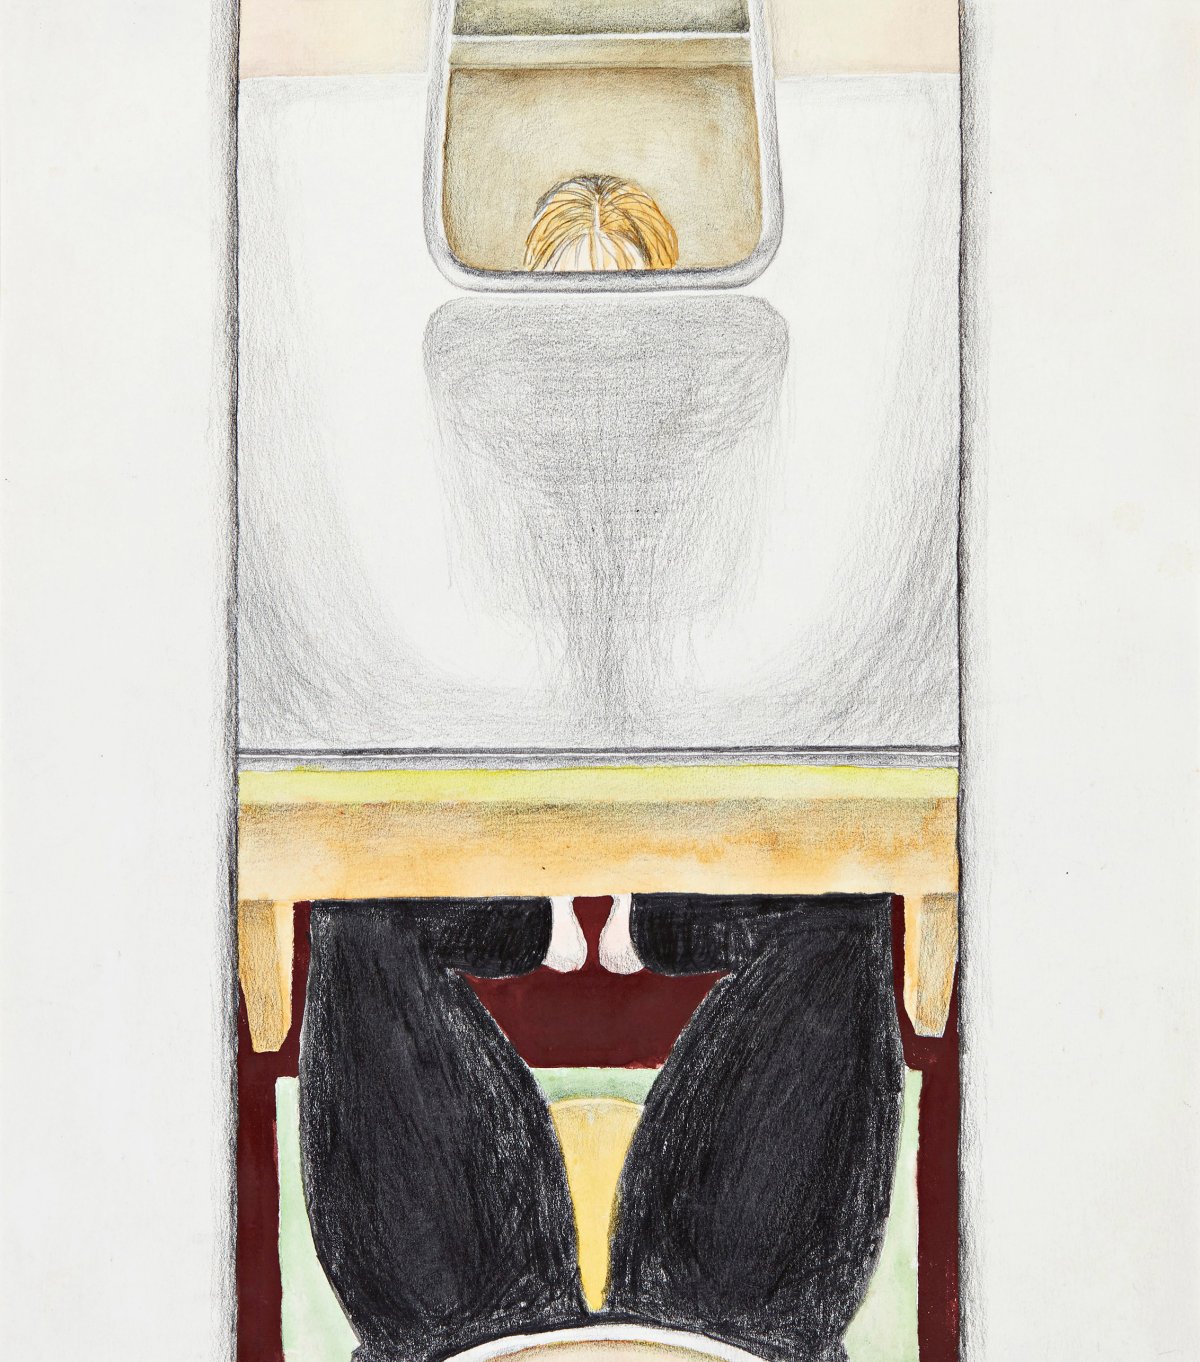 Anna Oppermann, Untitled, ca. 1965/66